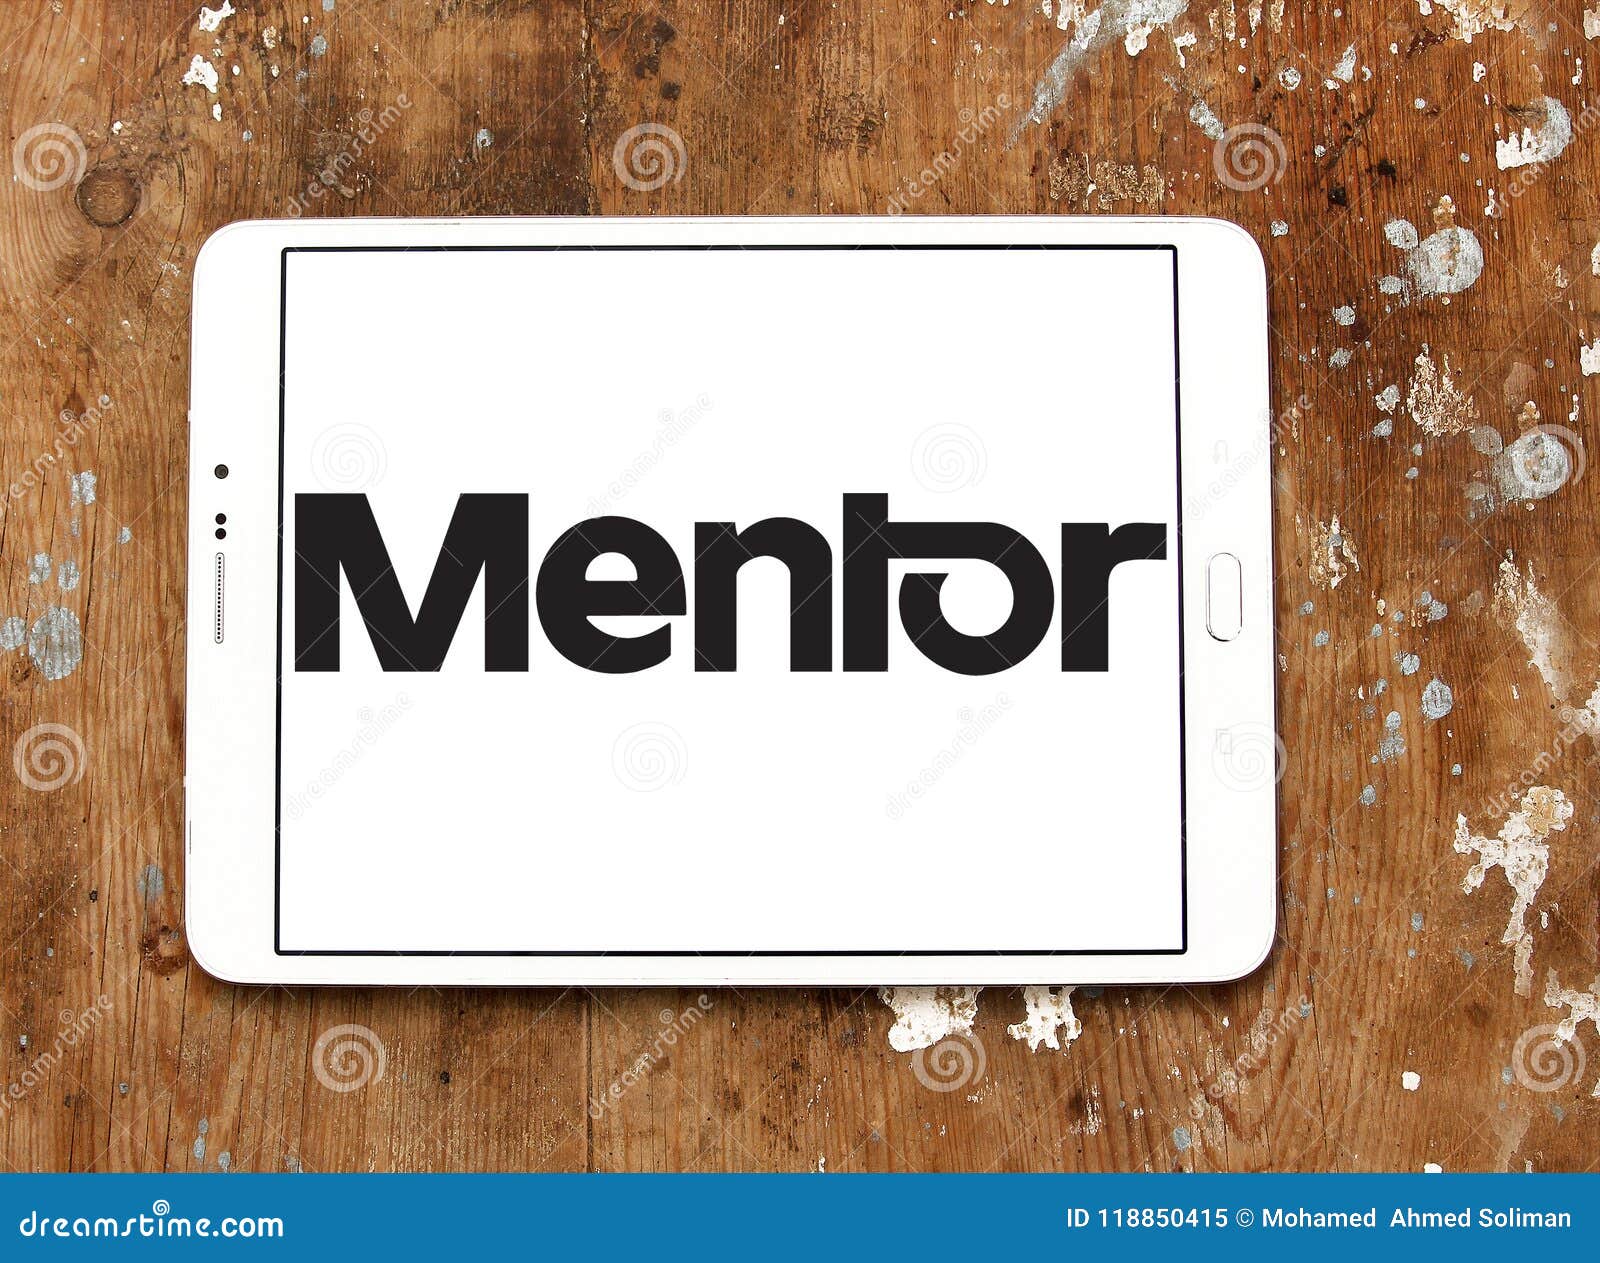 Mentor Graphics Corporation Logo Editorial Image - Image 118850415